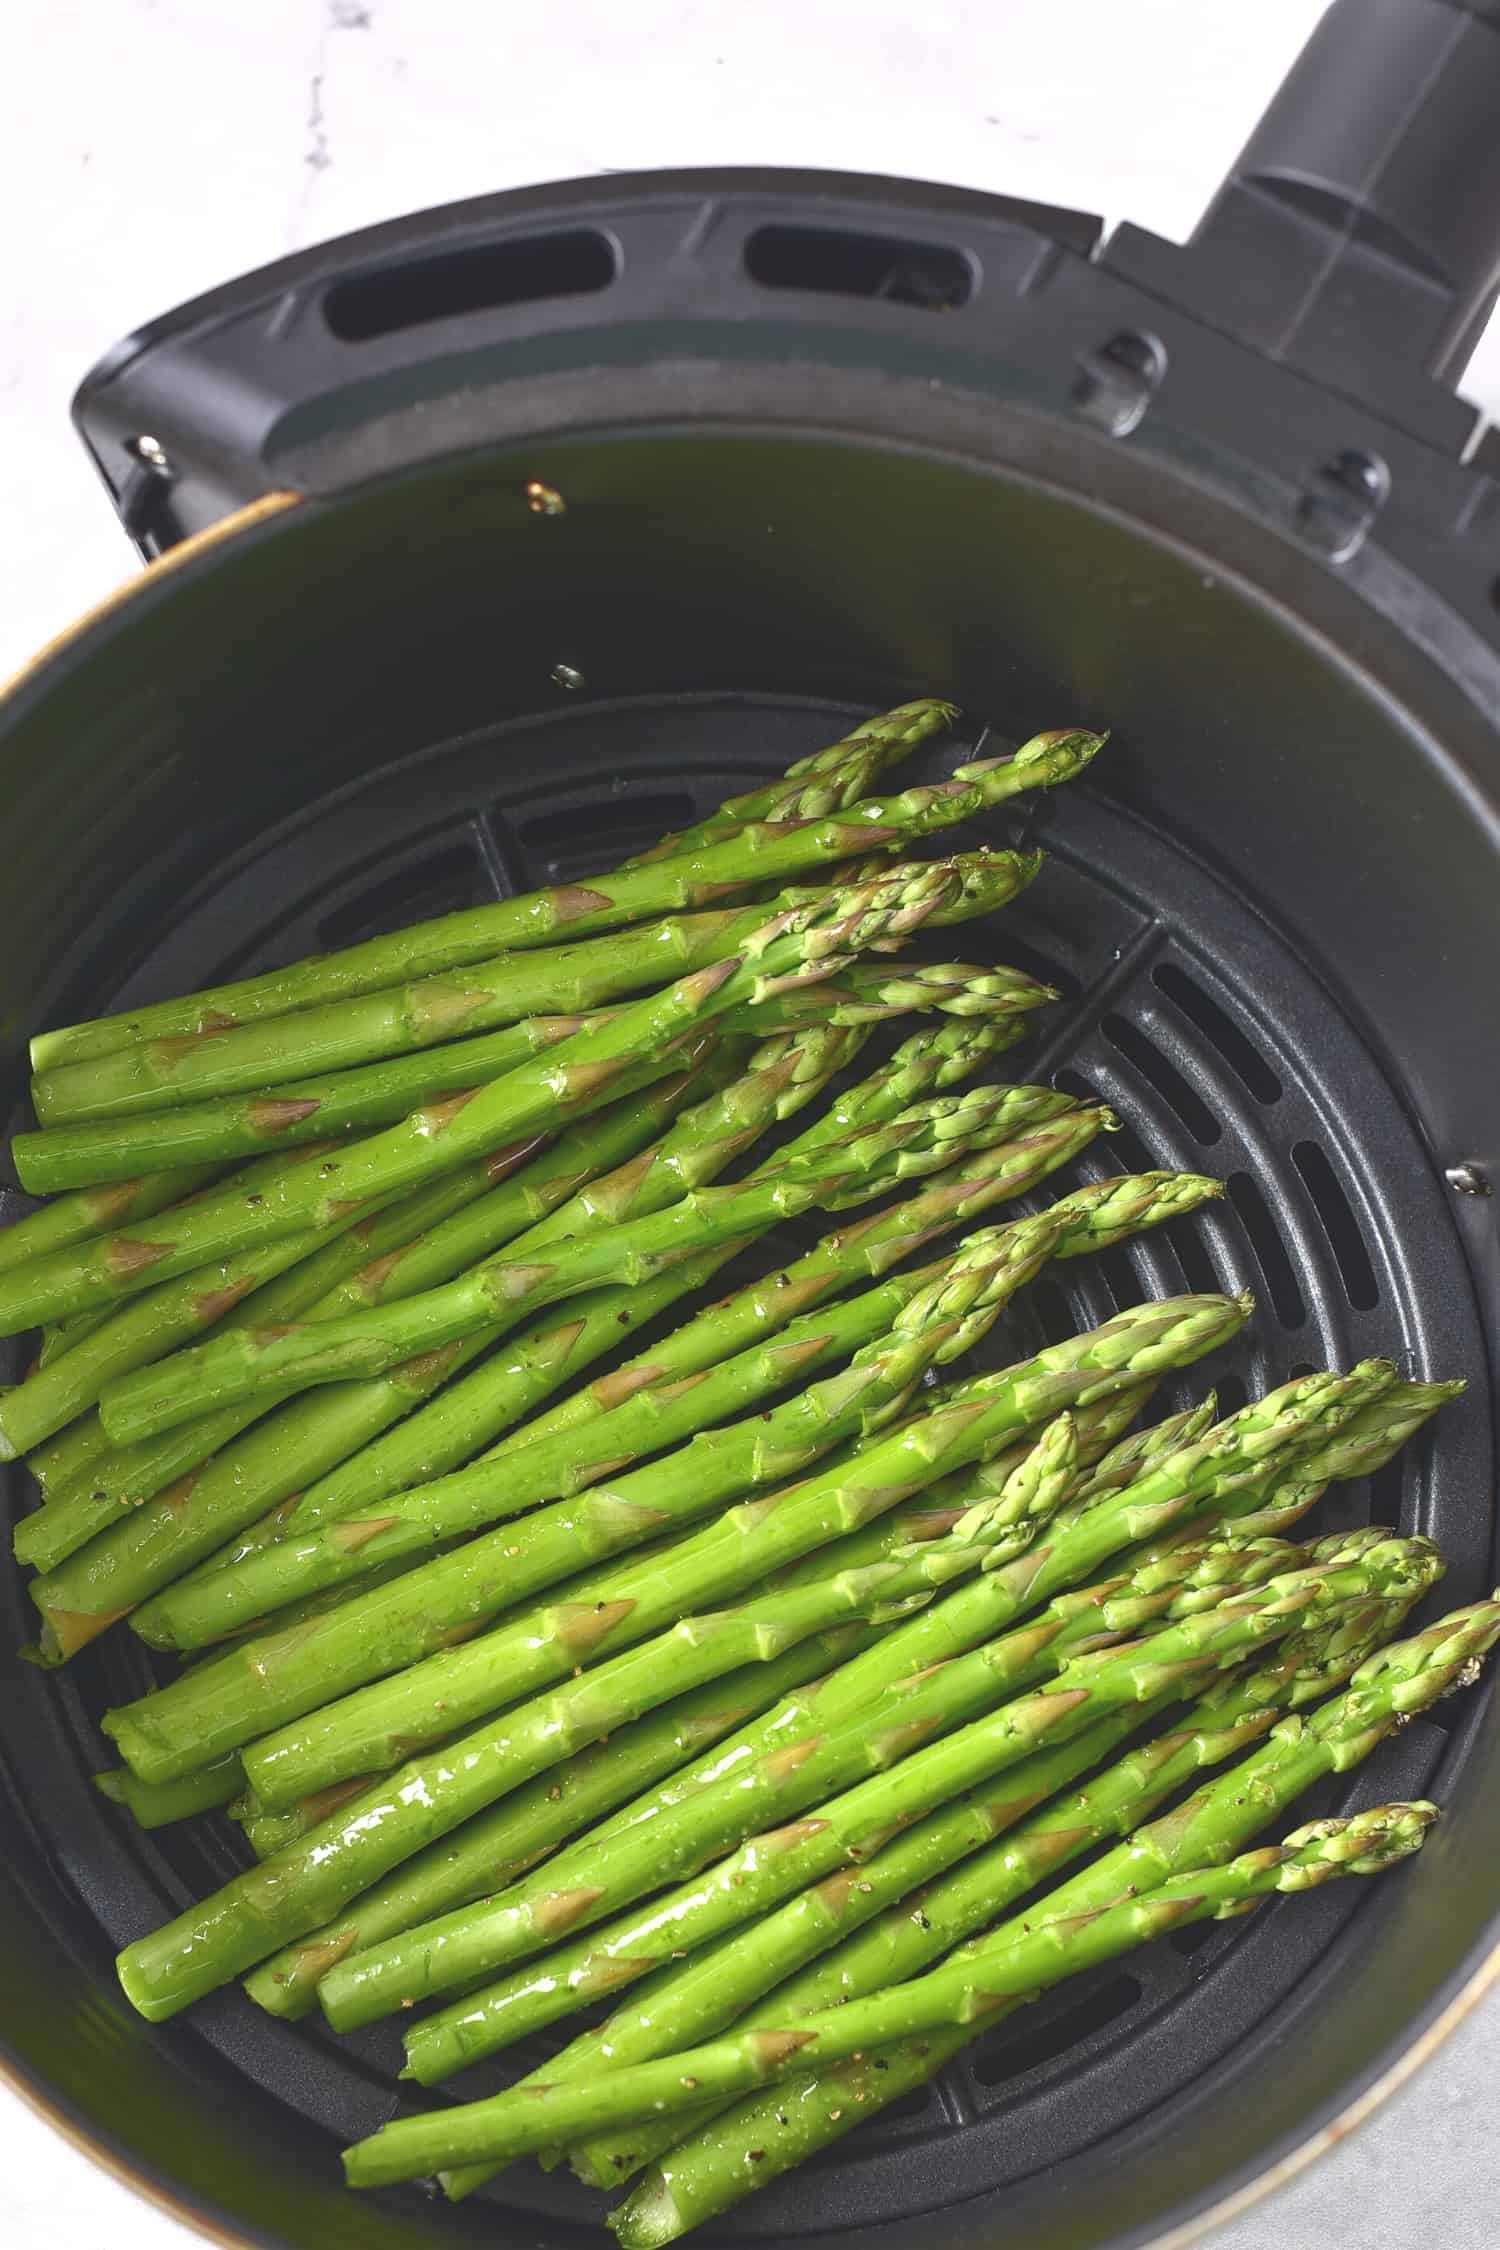 Asparagus stalks in air fryer basket.